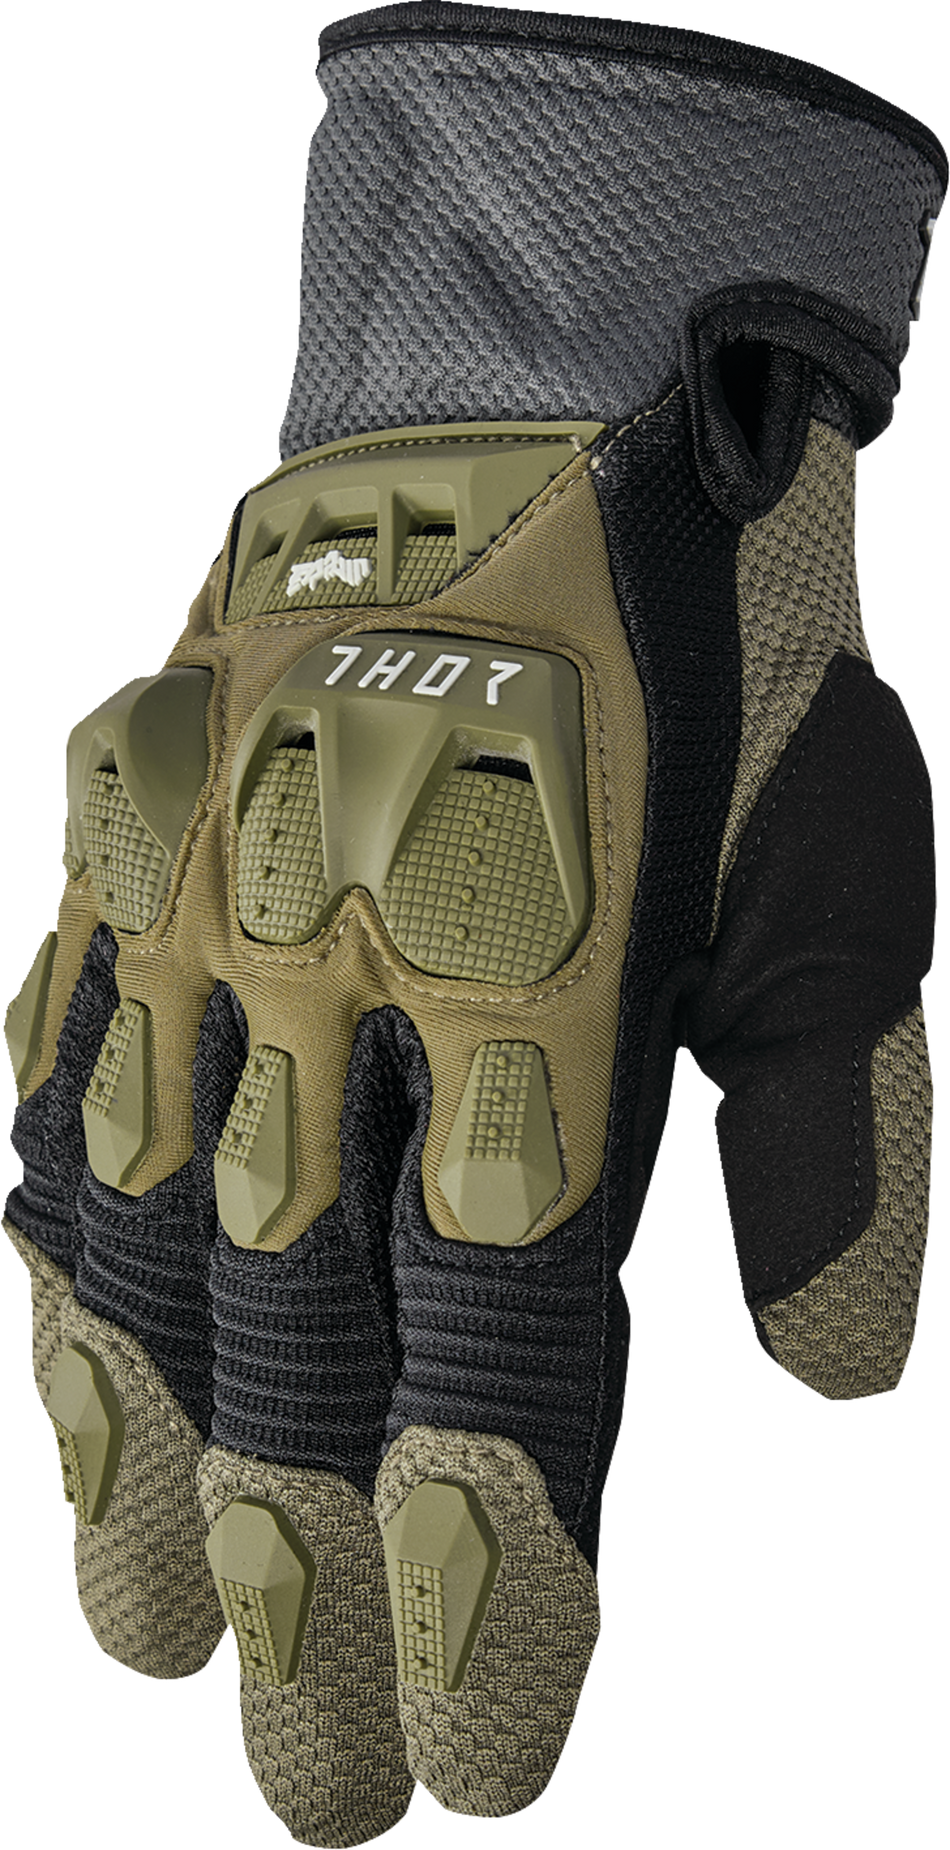 THOR Terrain Gloves - Army/Charcoal - XS 3330-7285